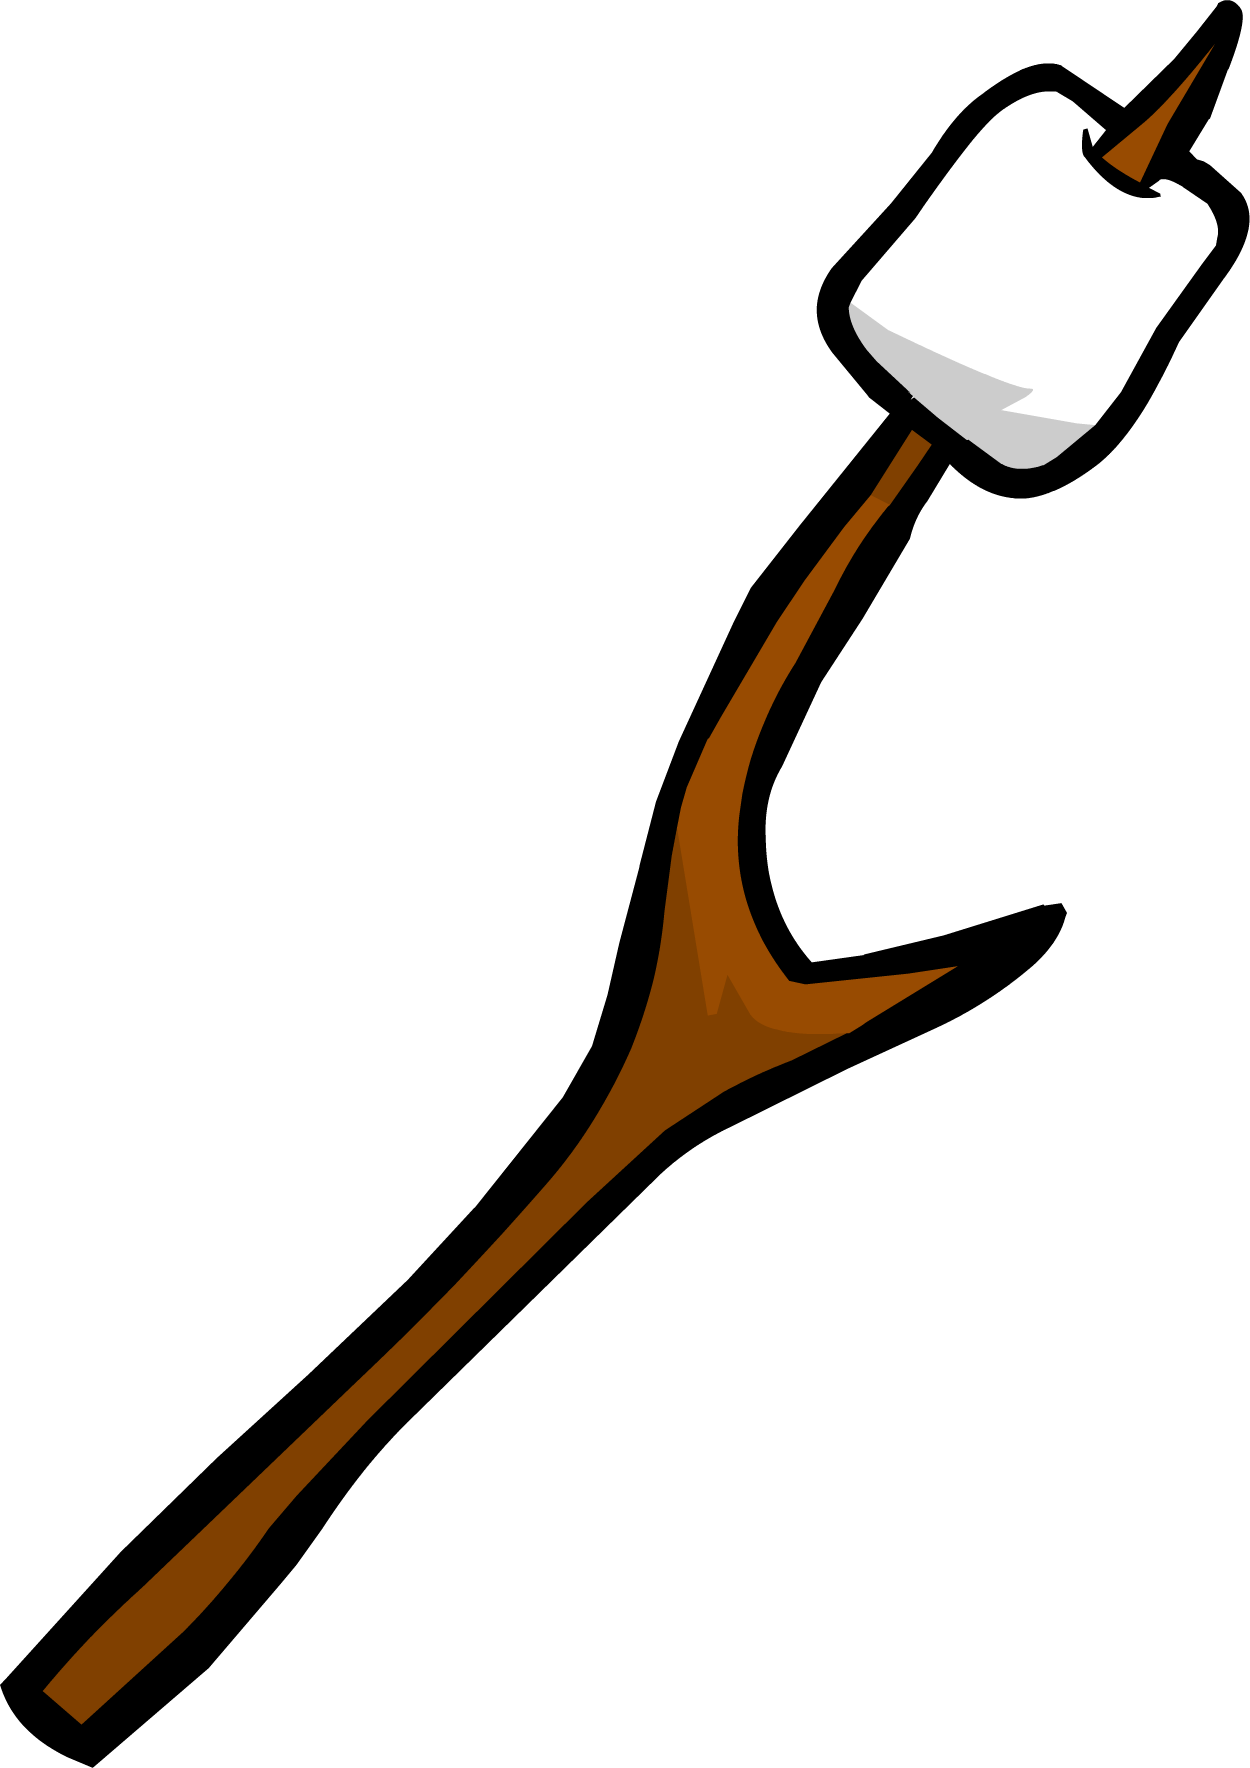 Toasted Marshmallowon Stick PNG image